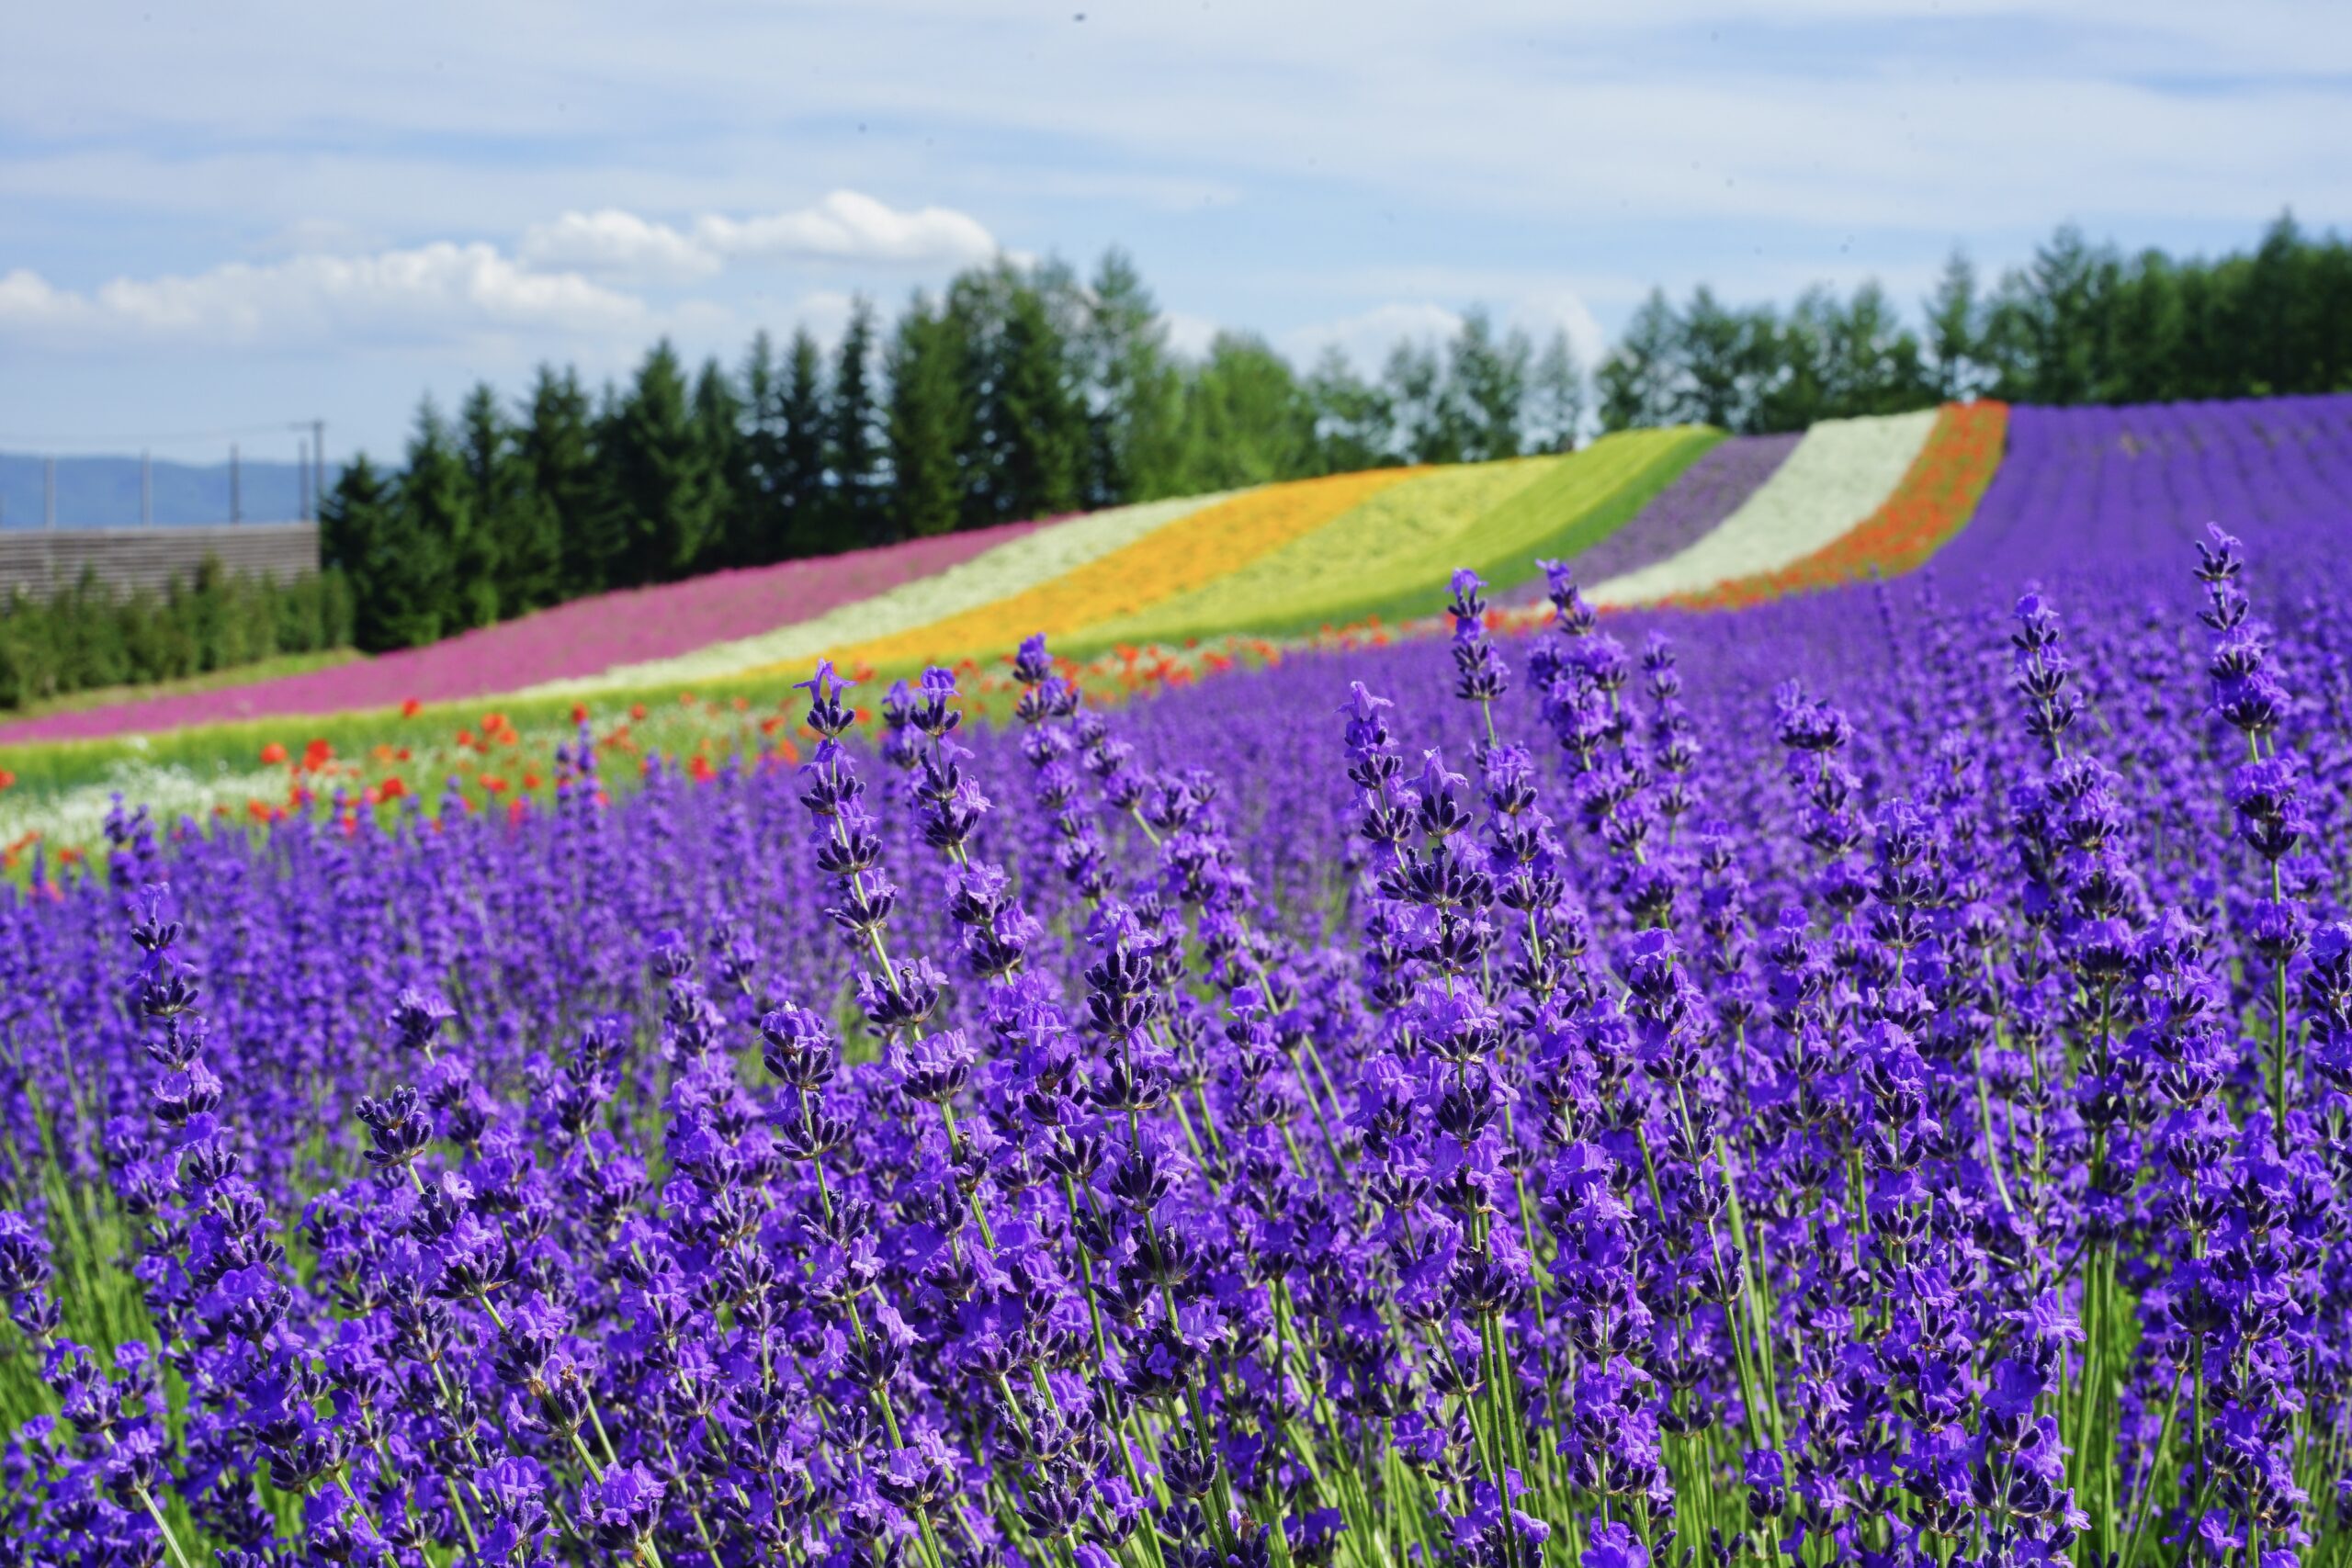 https://en.visit-hokkaido.jp/destinations/hokkaidos-treasured-lavender-fields